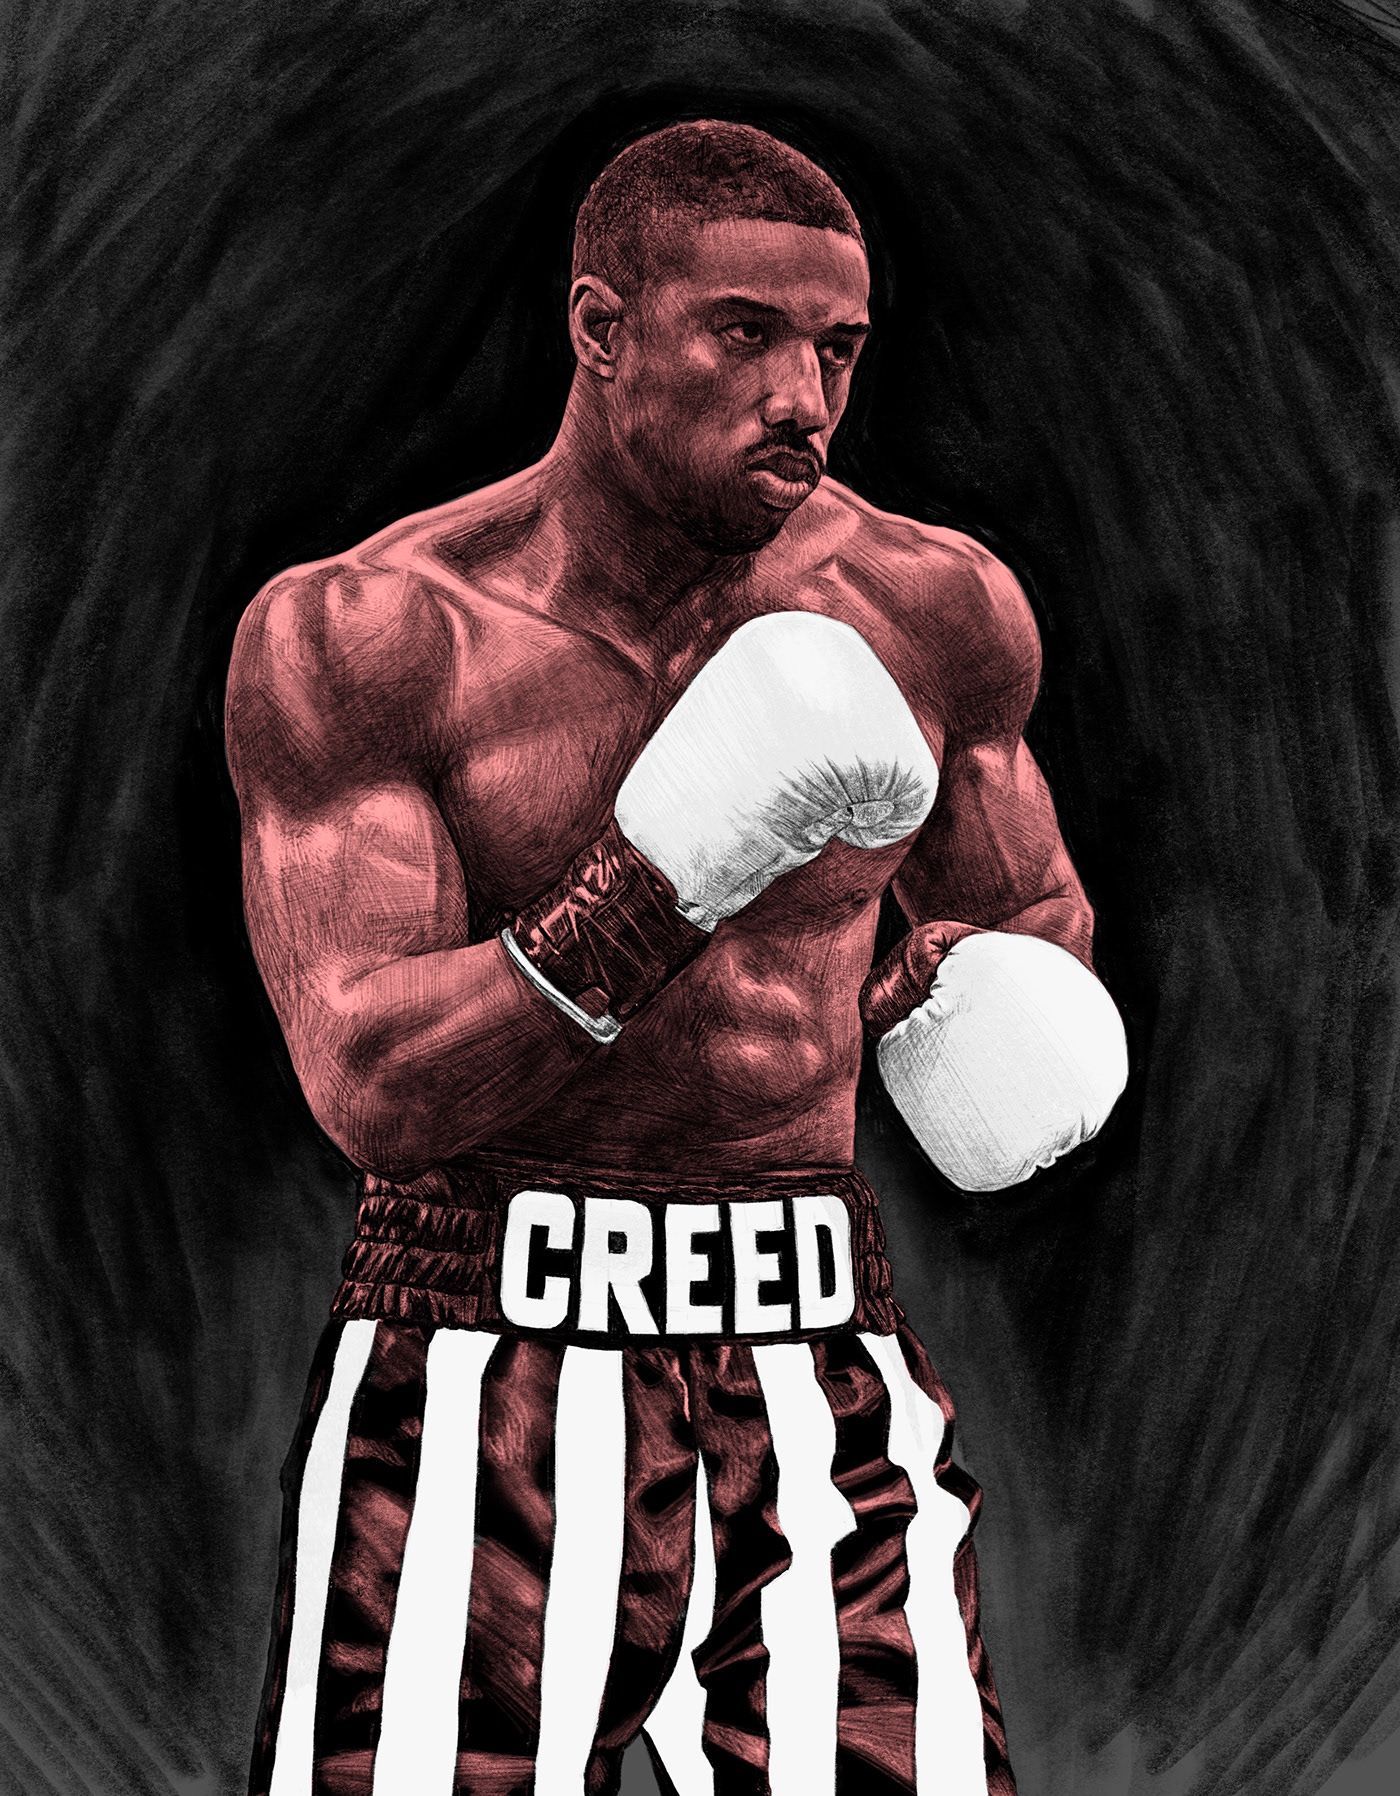 Adonis Creed by Kreg Franco. Creed, Michael bakari jordan